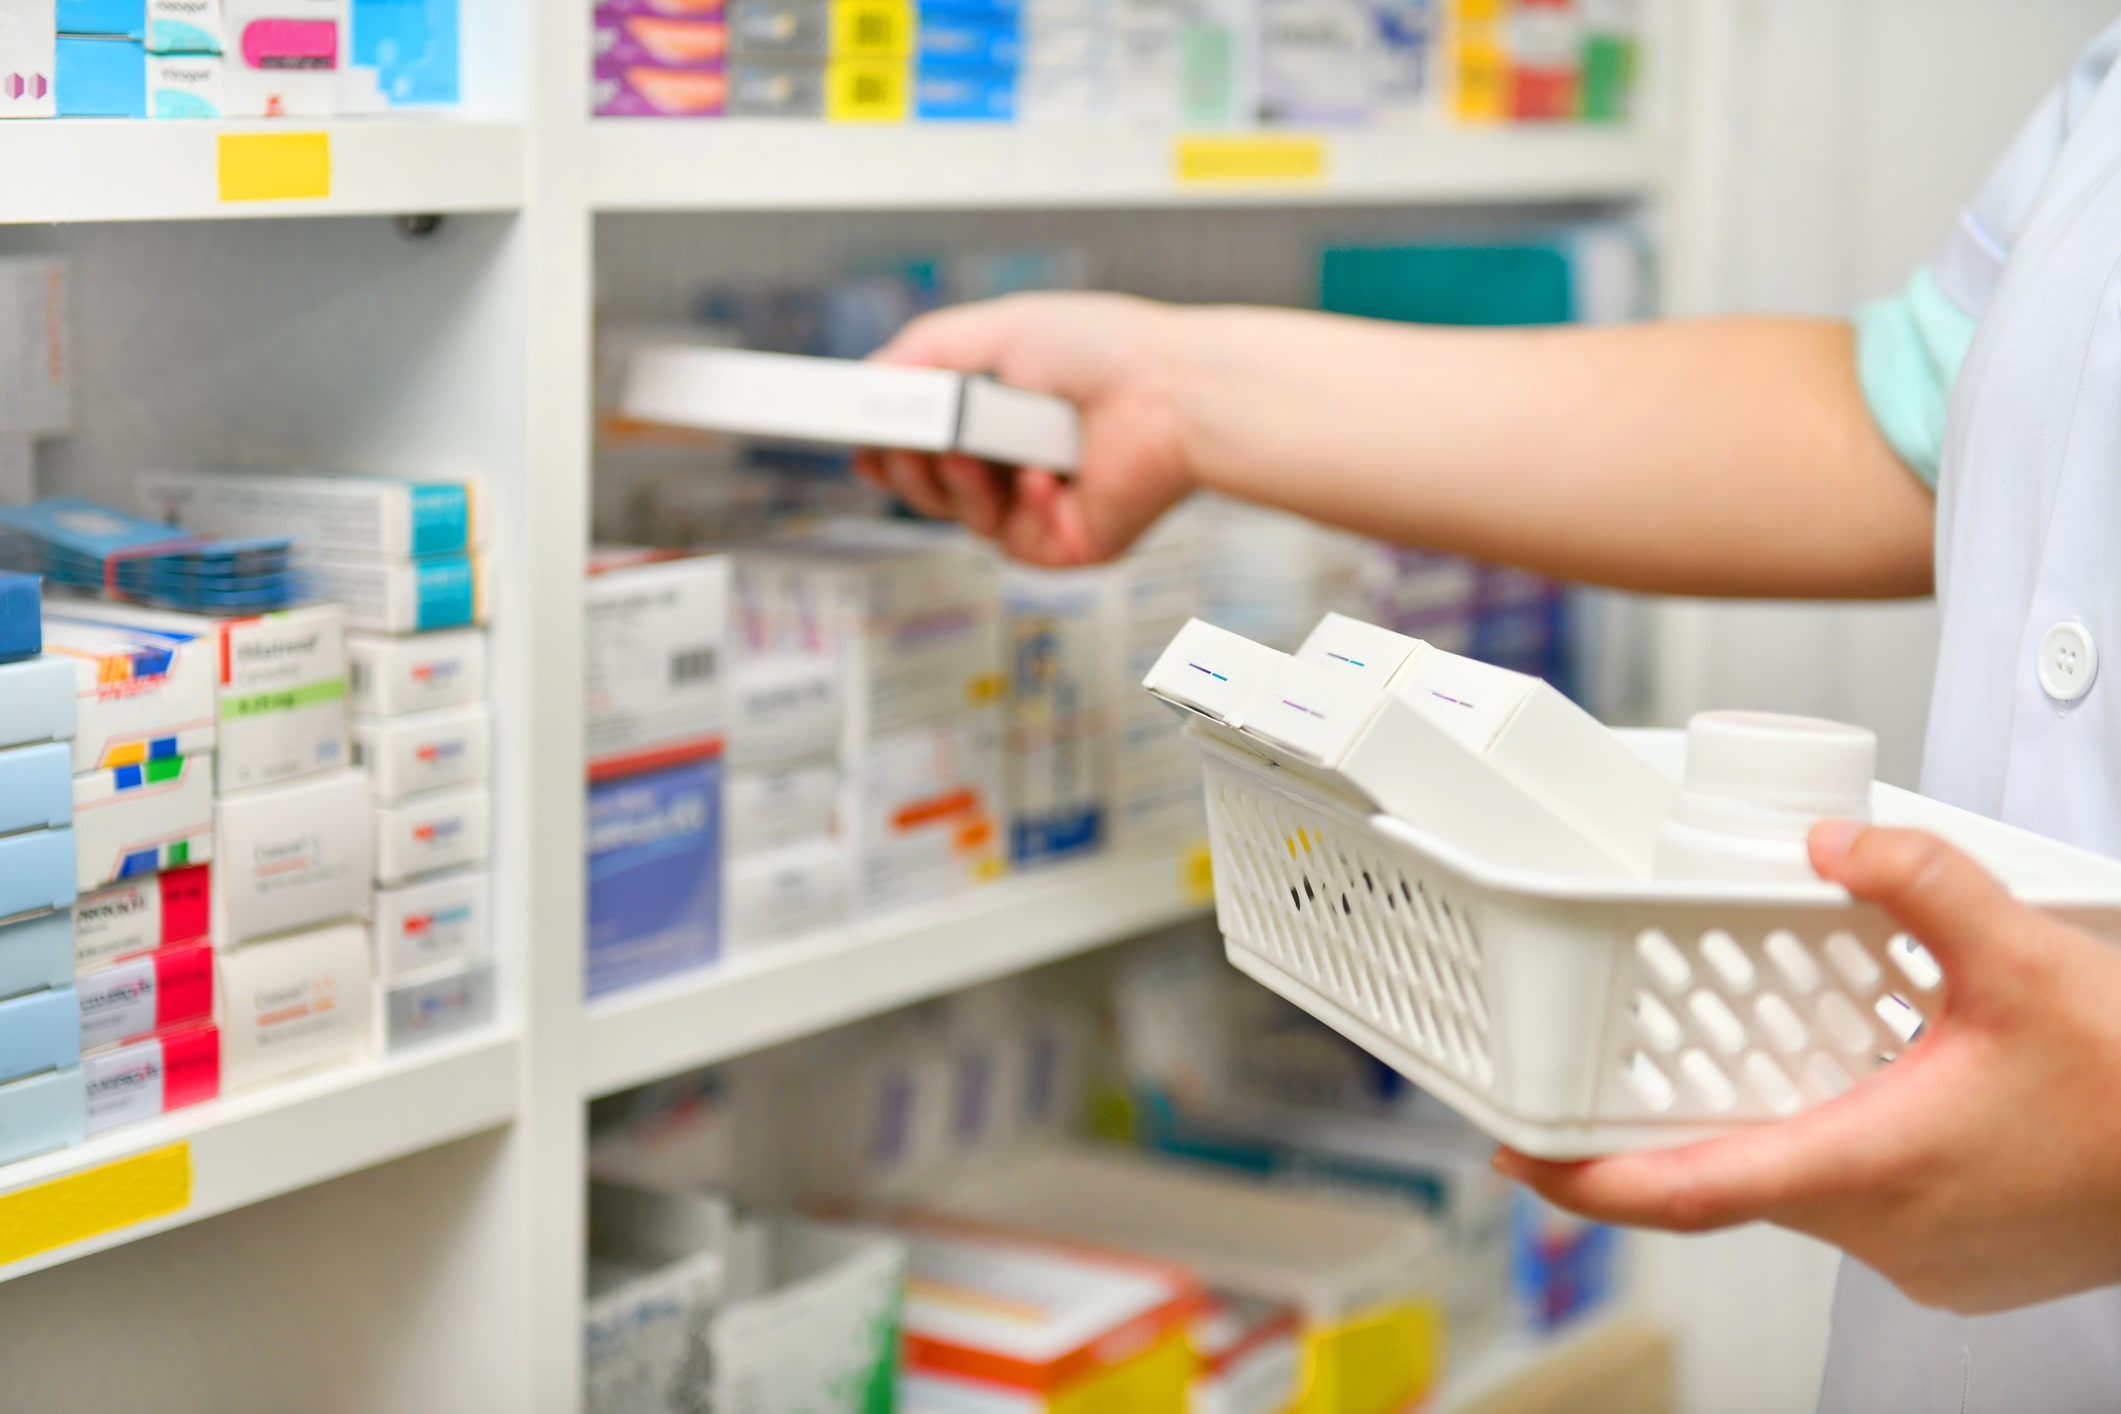 pharmacist putting medication away on shelf